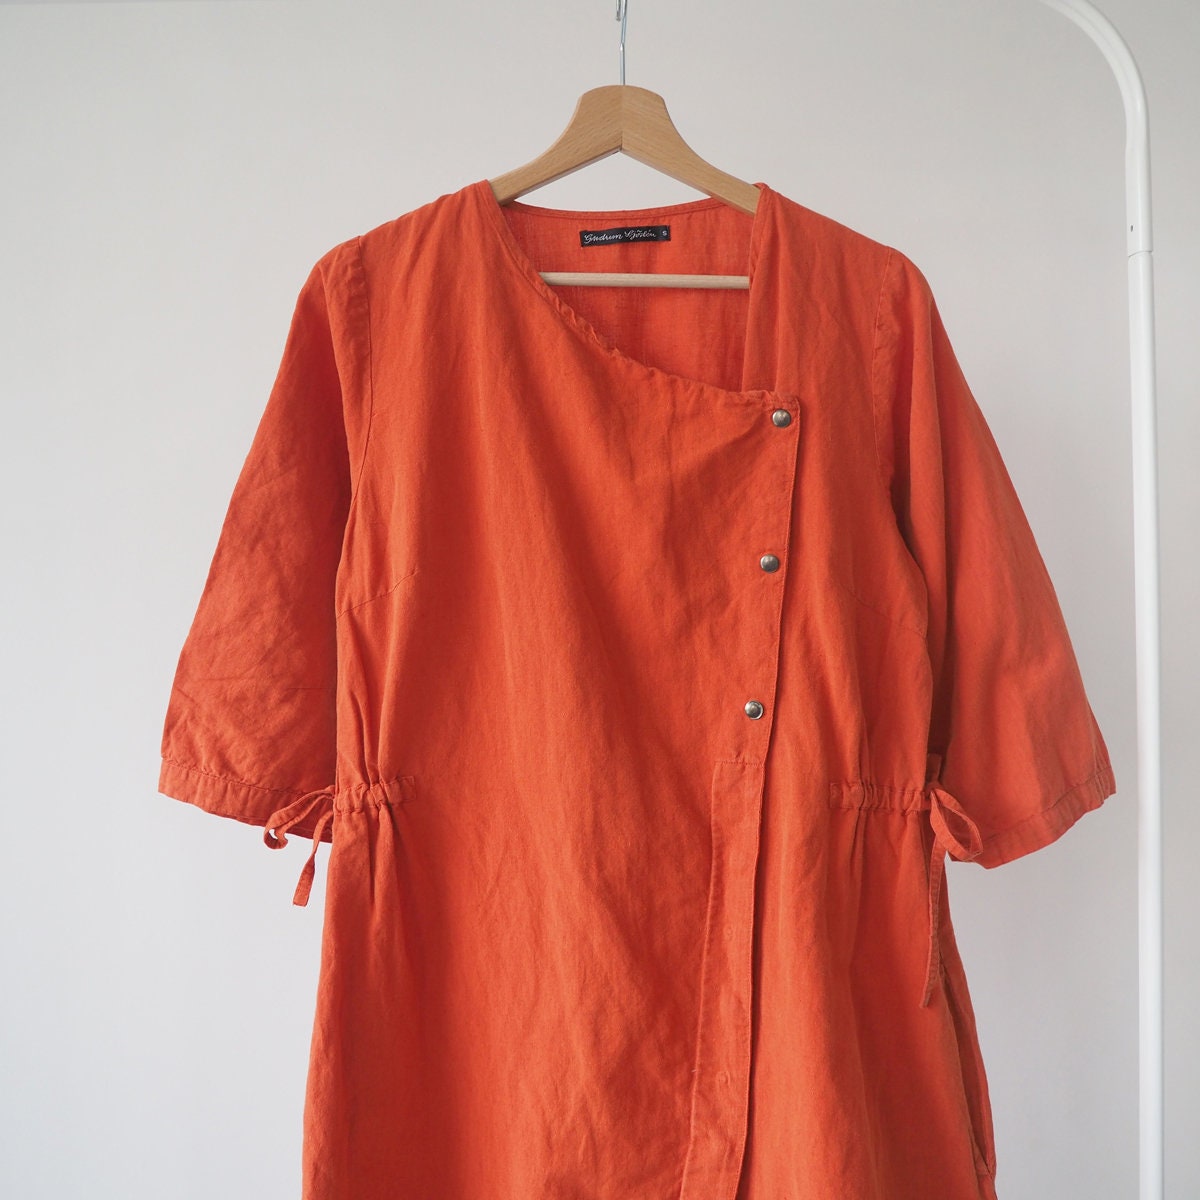 Gudrun Sjoden linen cotton natural dress asymmetric boho | Etsy